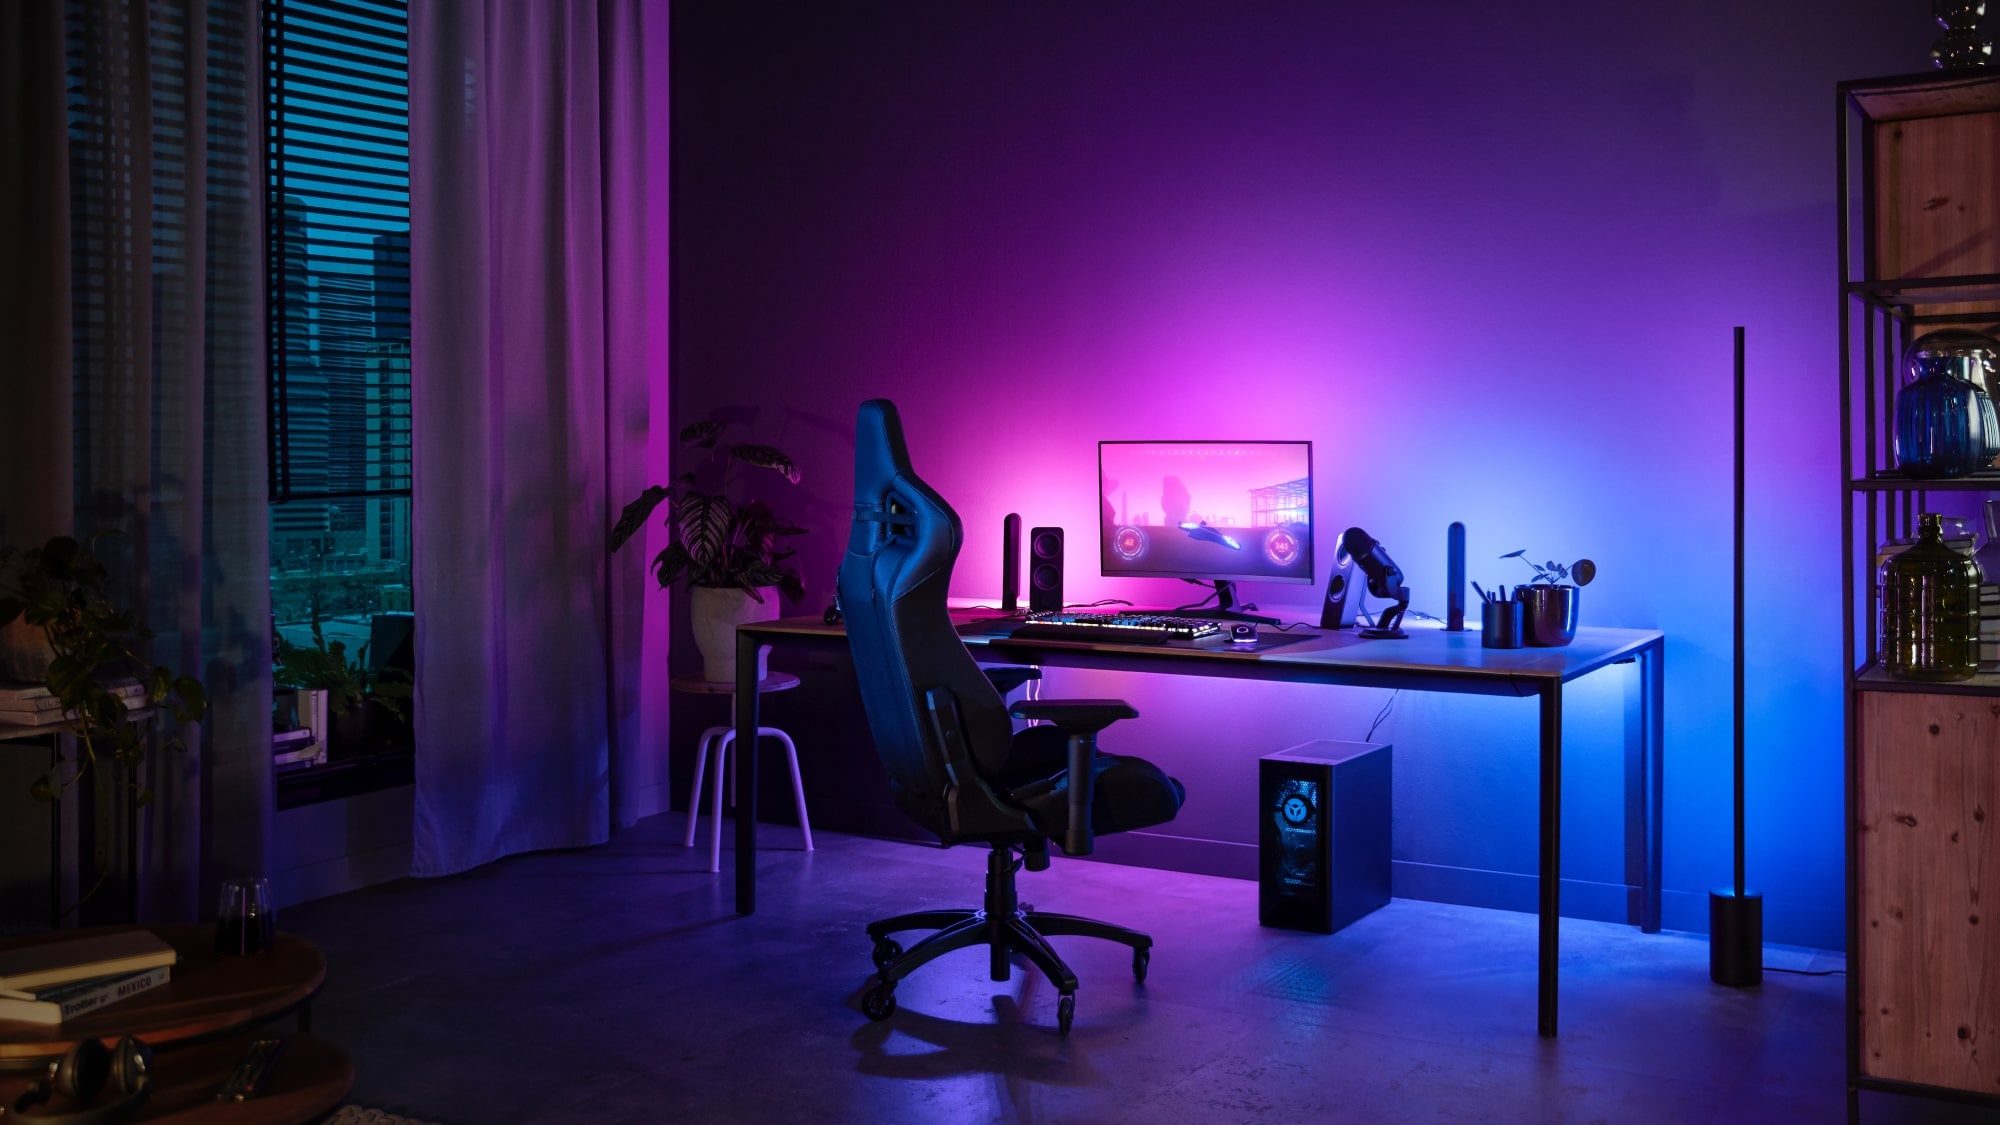 360 Smart LED Lampe Gaming,RGB Lampe de Jeu LED Ambiance Lamp avec